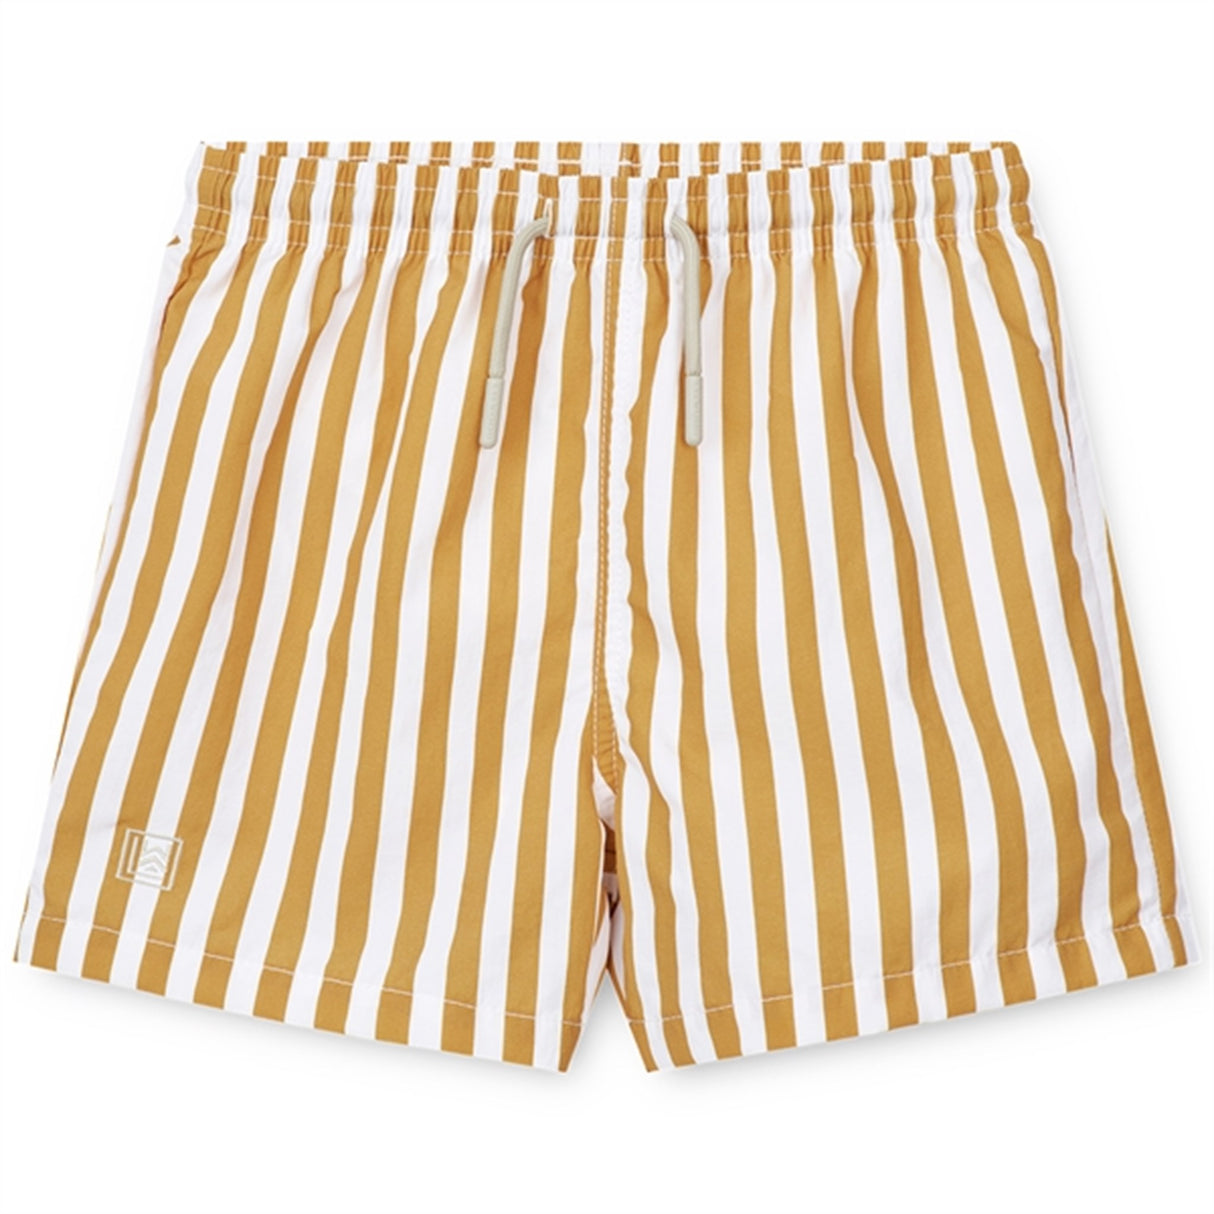 Liewood Duke Badeshorts Stripe Yellow Mellow/White 2